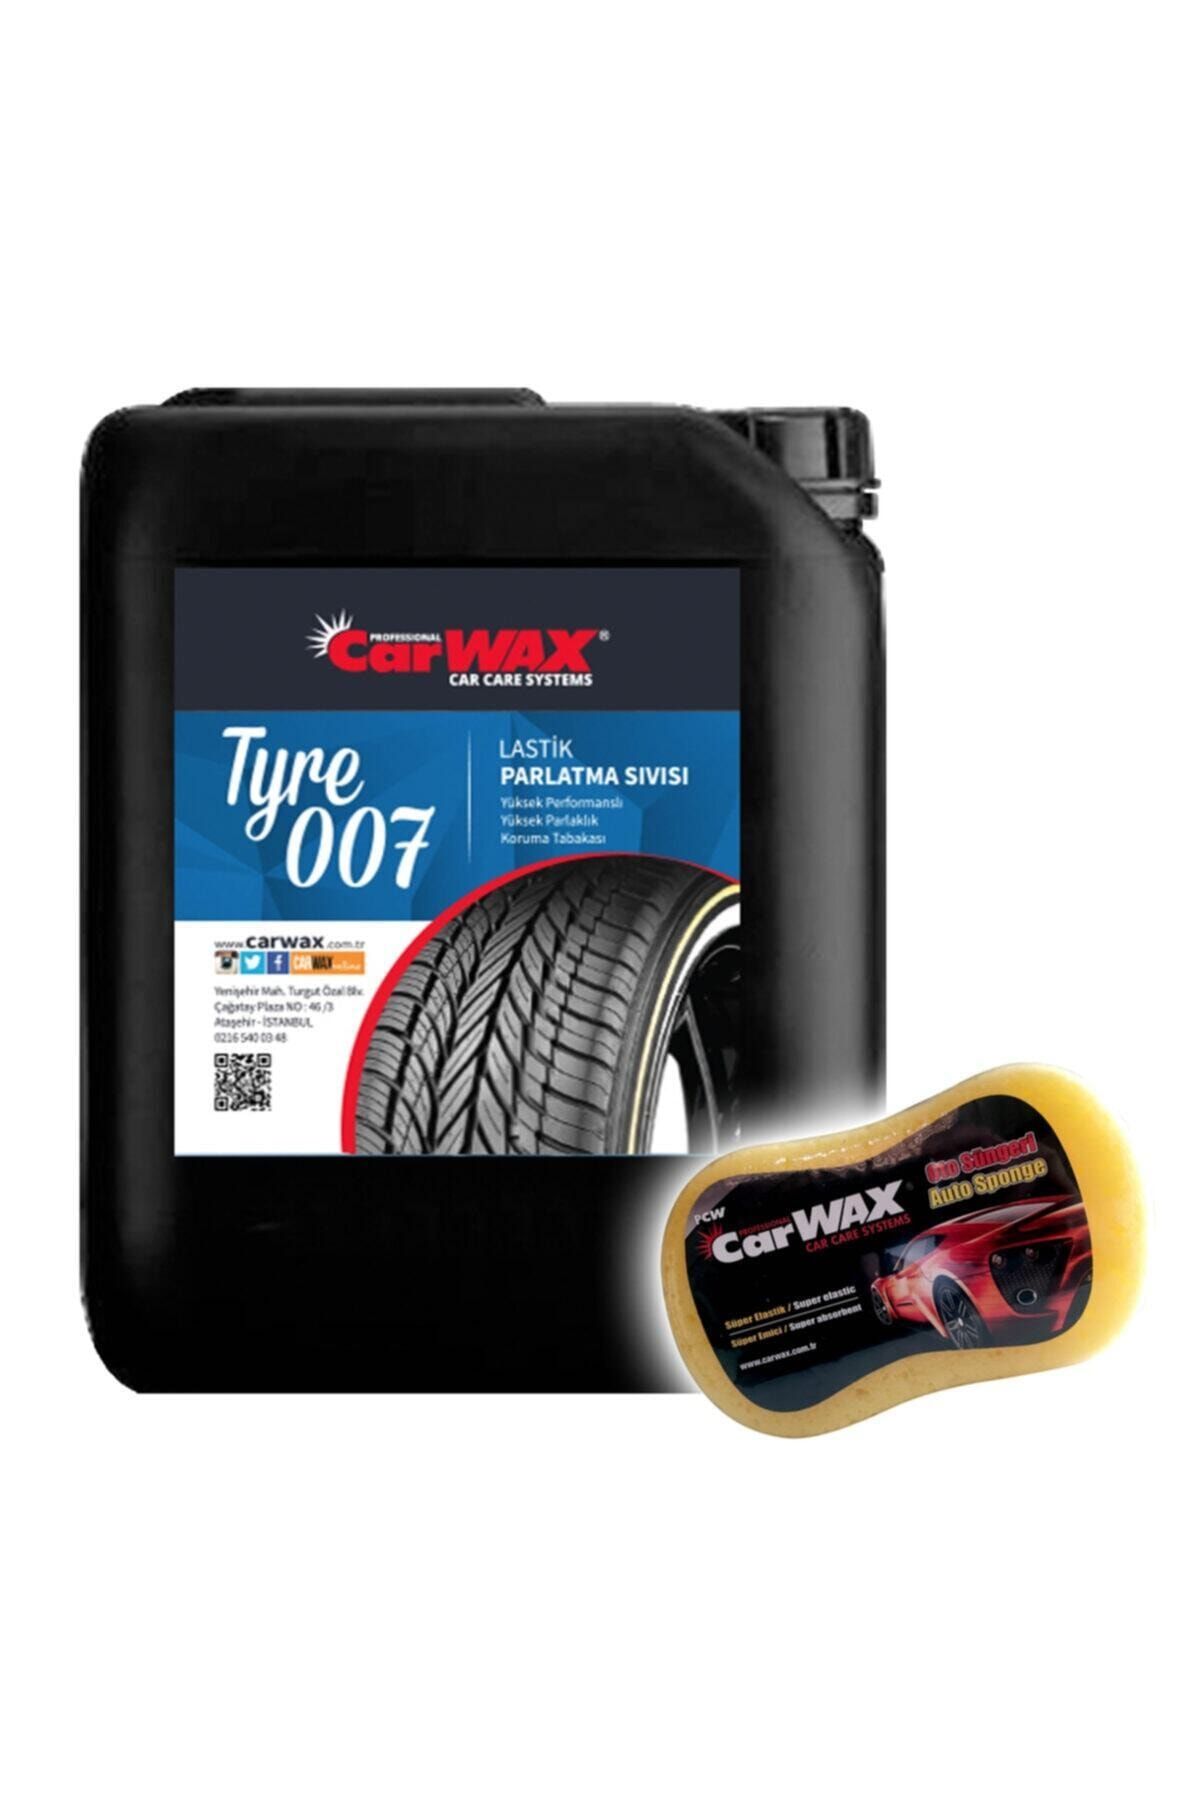 Carwax Lastik Parlatma - Rubber Tyre 007 - 5 Kg